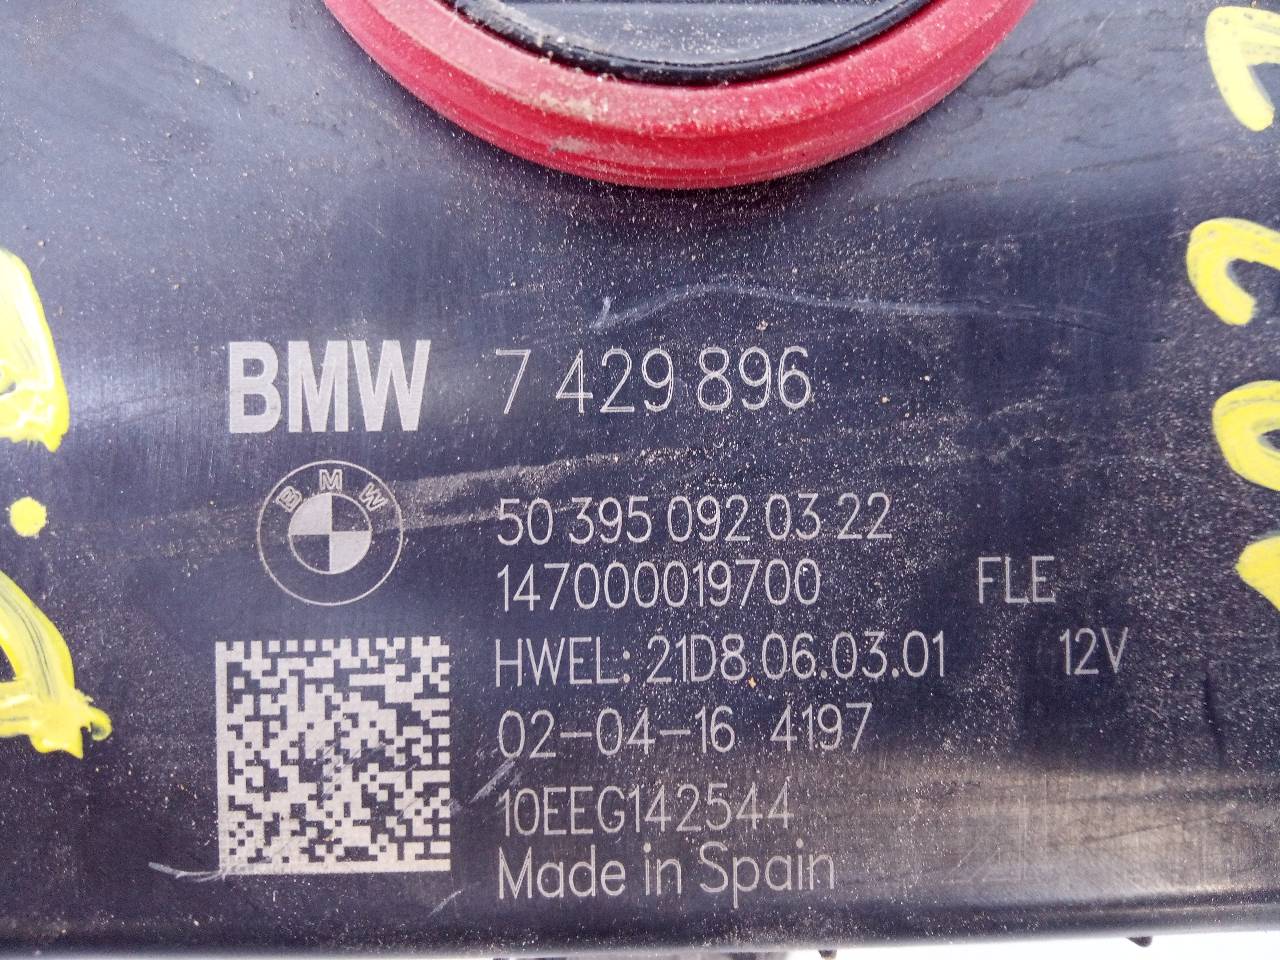 BMW X1 F48/F49 (2015-2023) Xenon Light Control Unit 7429896, 503950920322 25367698